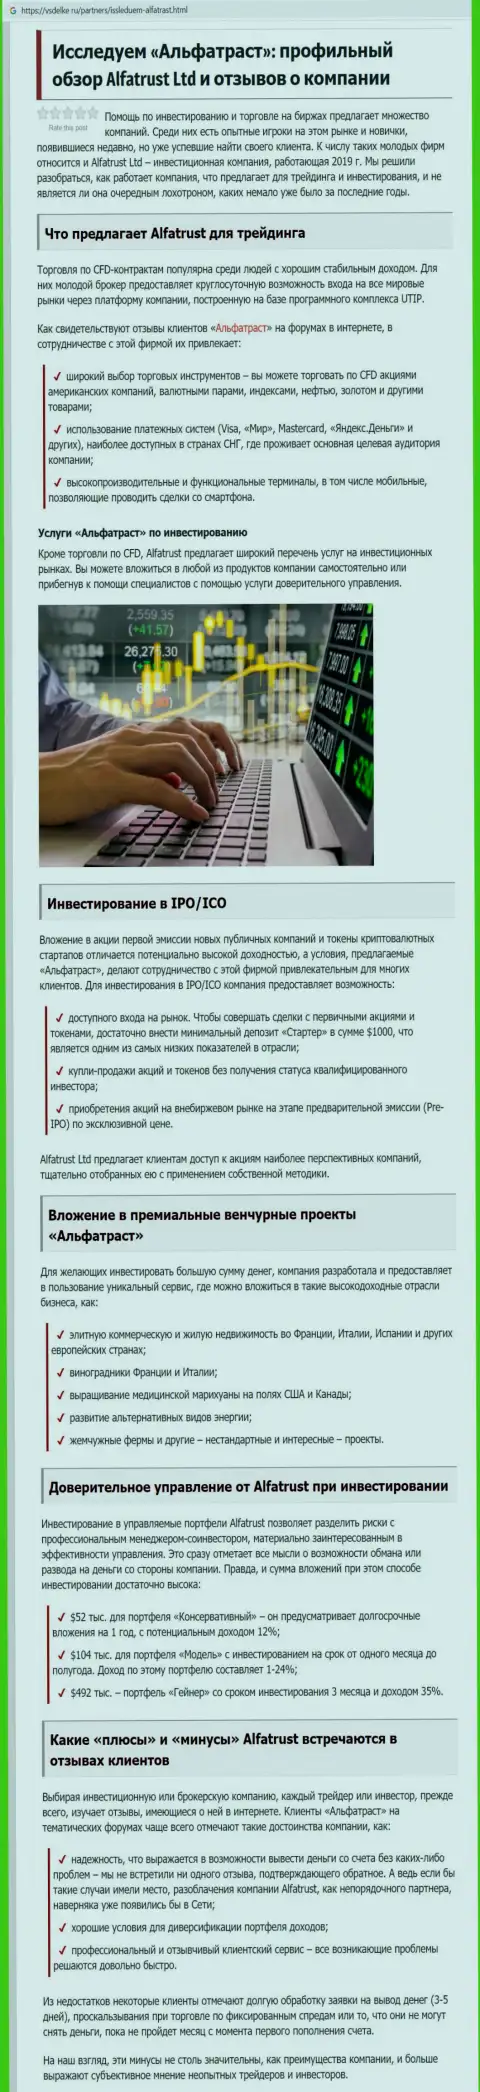 Публикация об forex организации AlfaTrust на сайте Vsdelke Ru